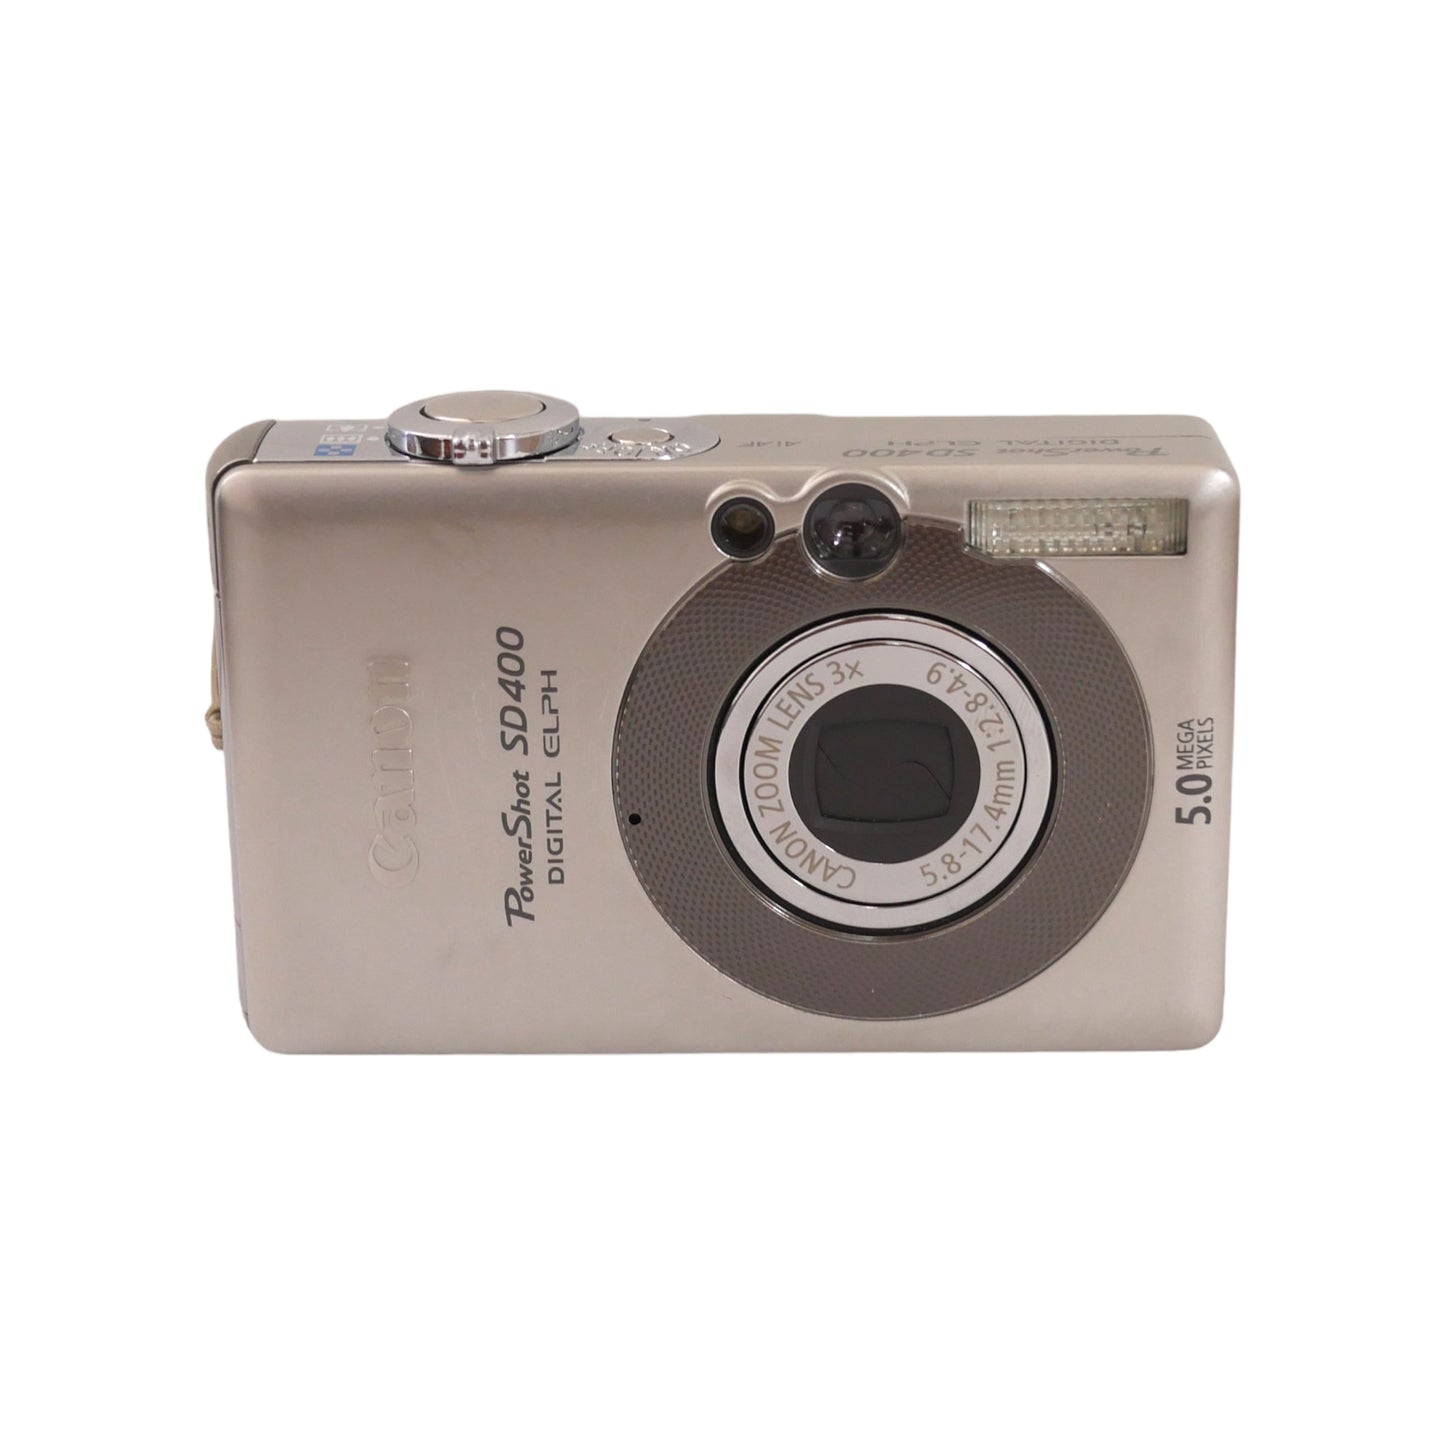 Canon Powershot SD400 5.0 Megapixel Digital Camera